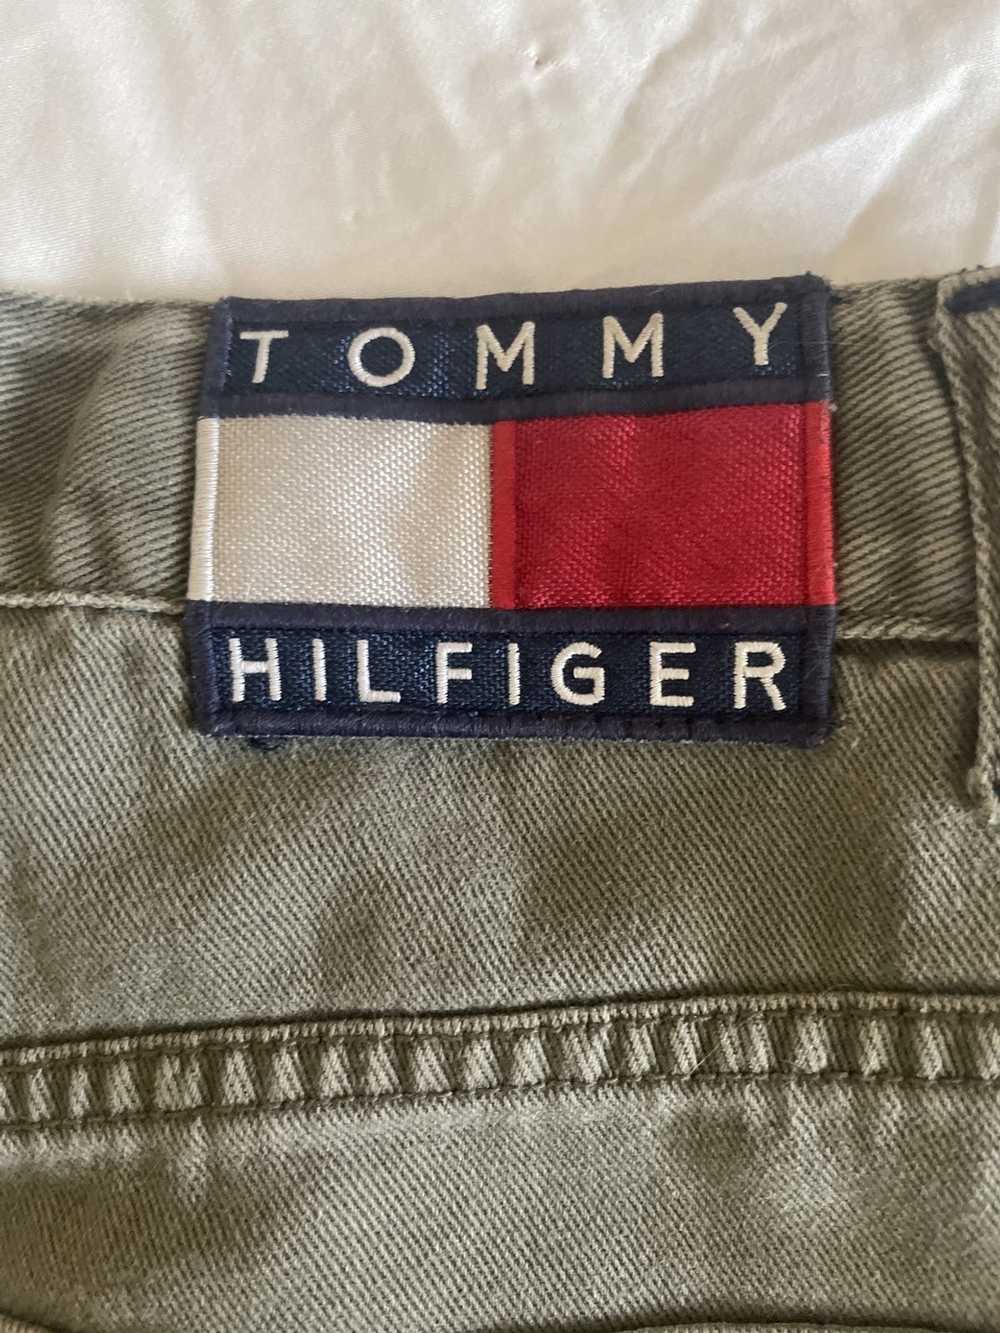 Tommy Hilfiger Vintage Timmy shorts - image 3